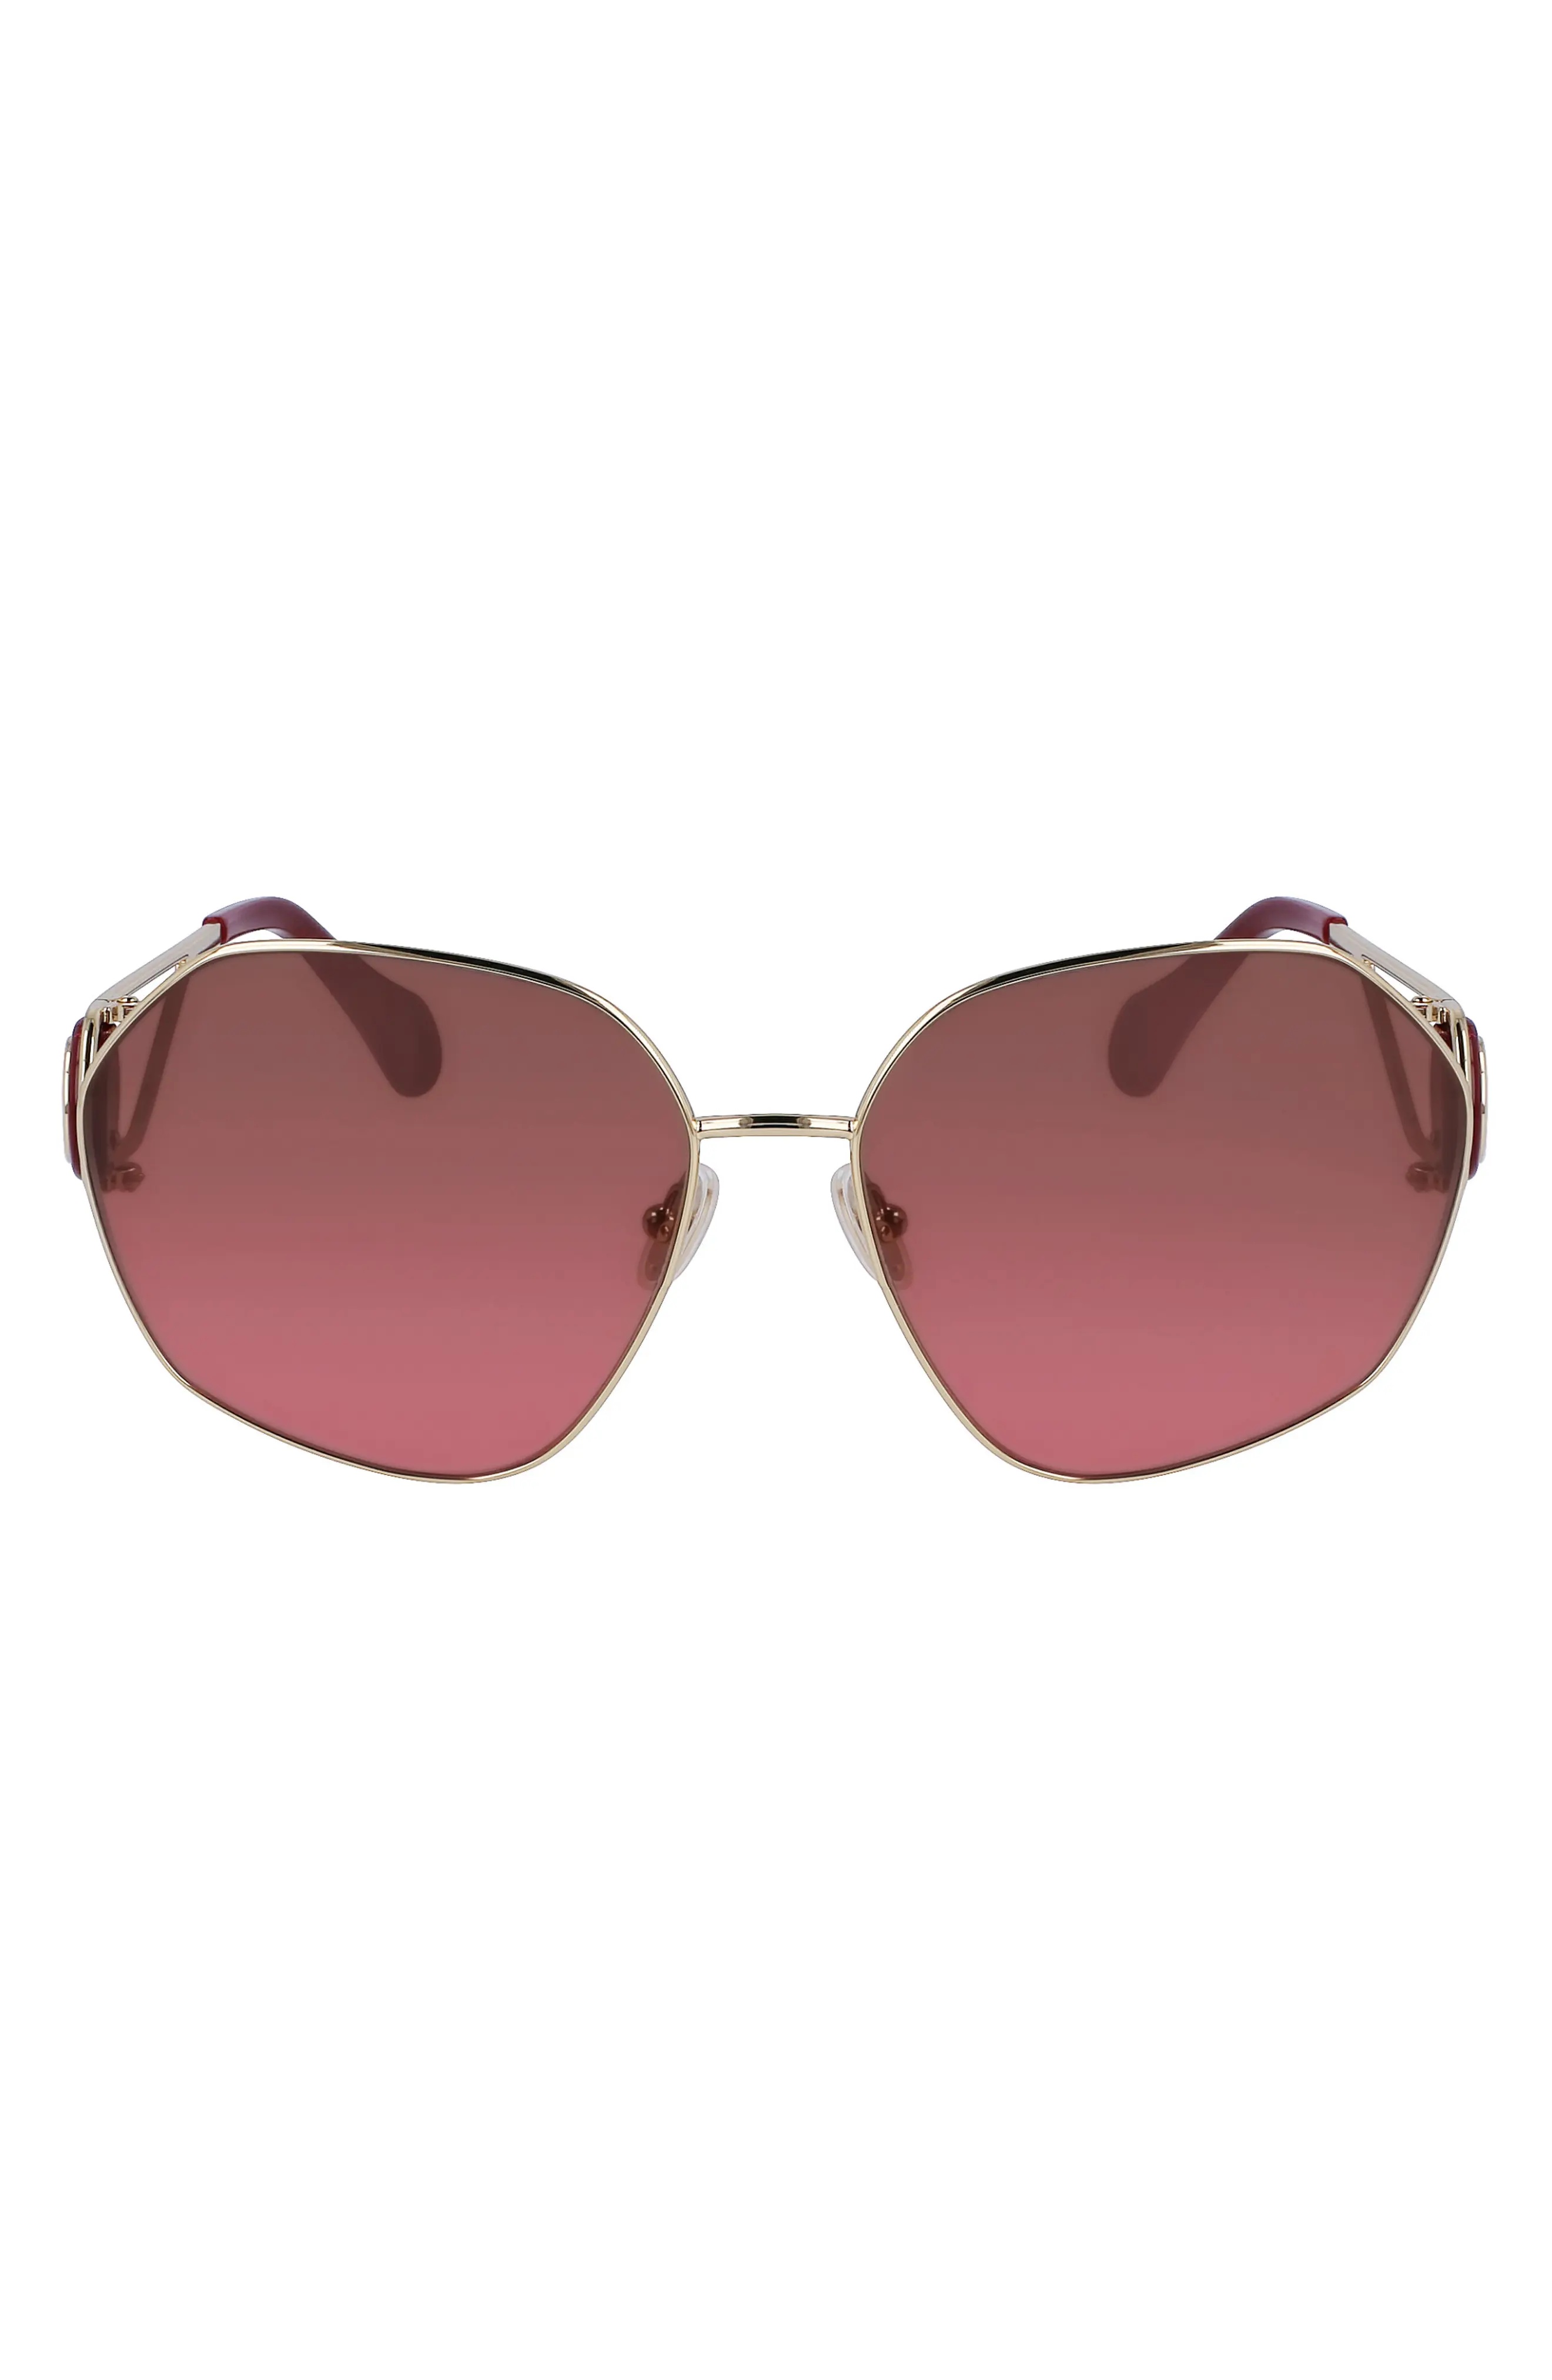 Mother & Child 62mm Oversize Rectangular Sunglasses in Gold/Gradient Cherry - 1